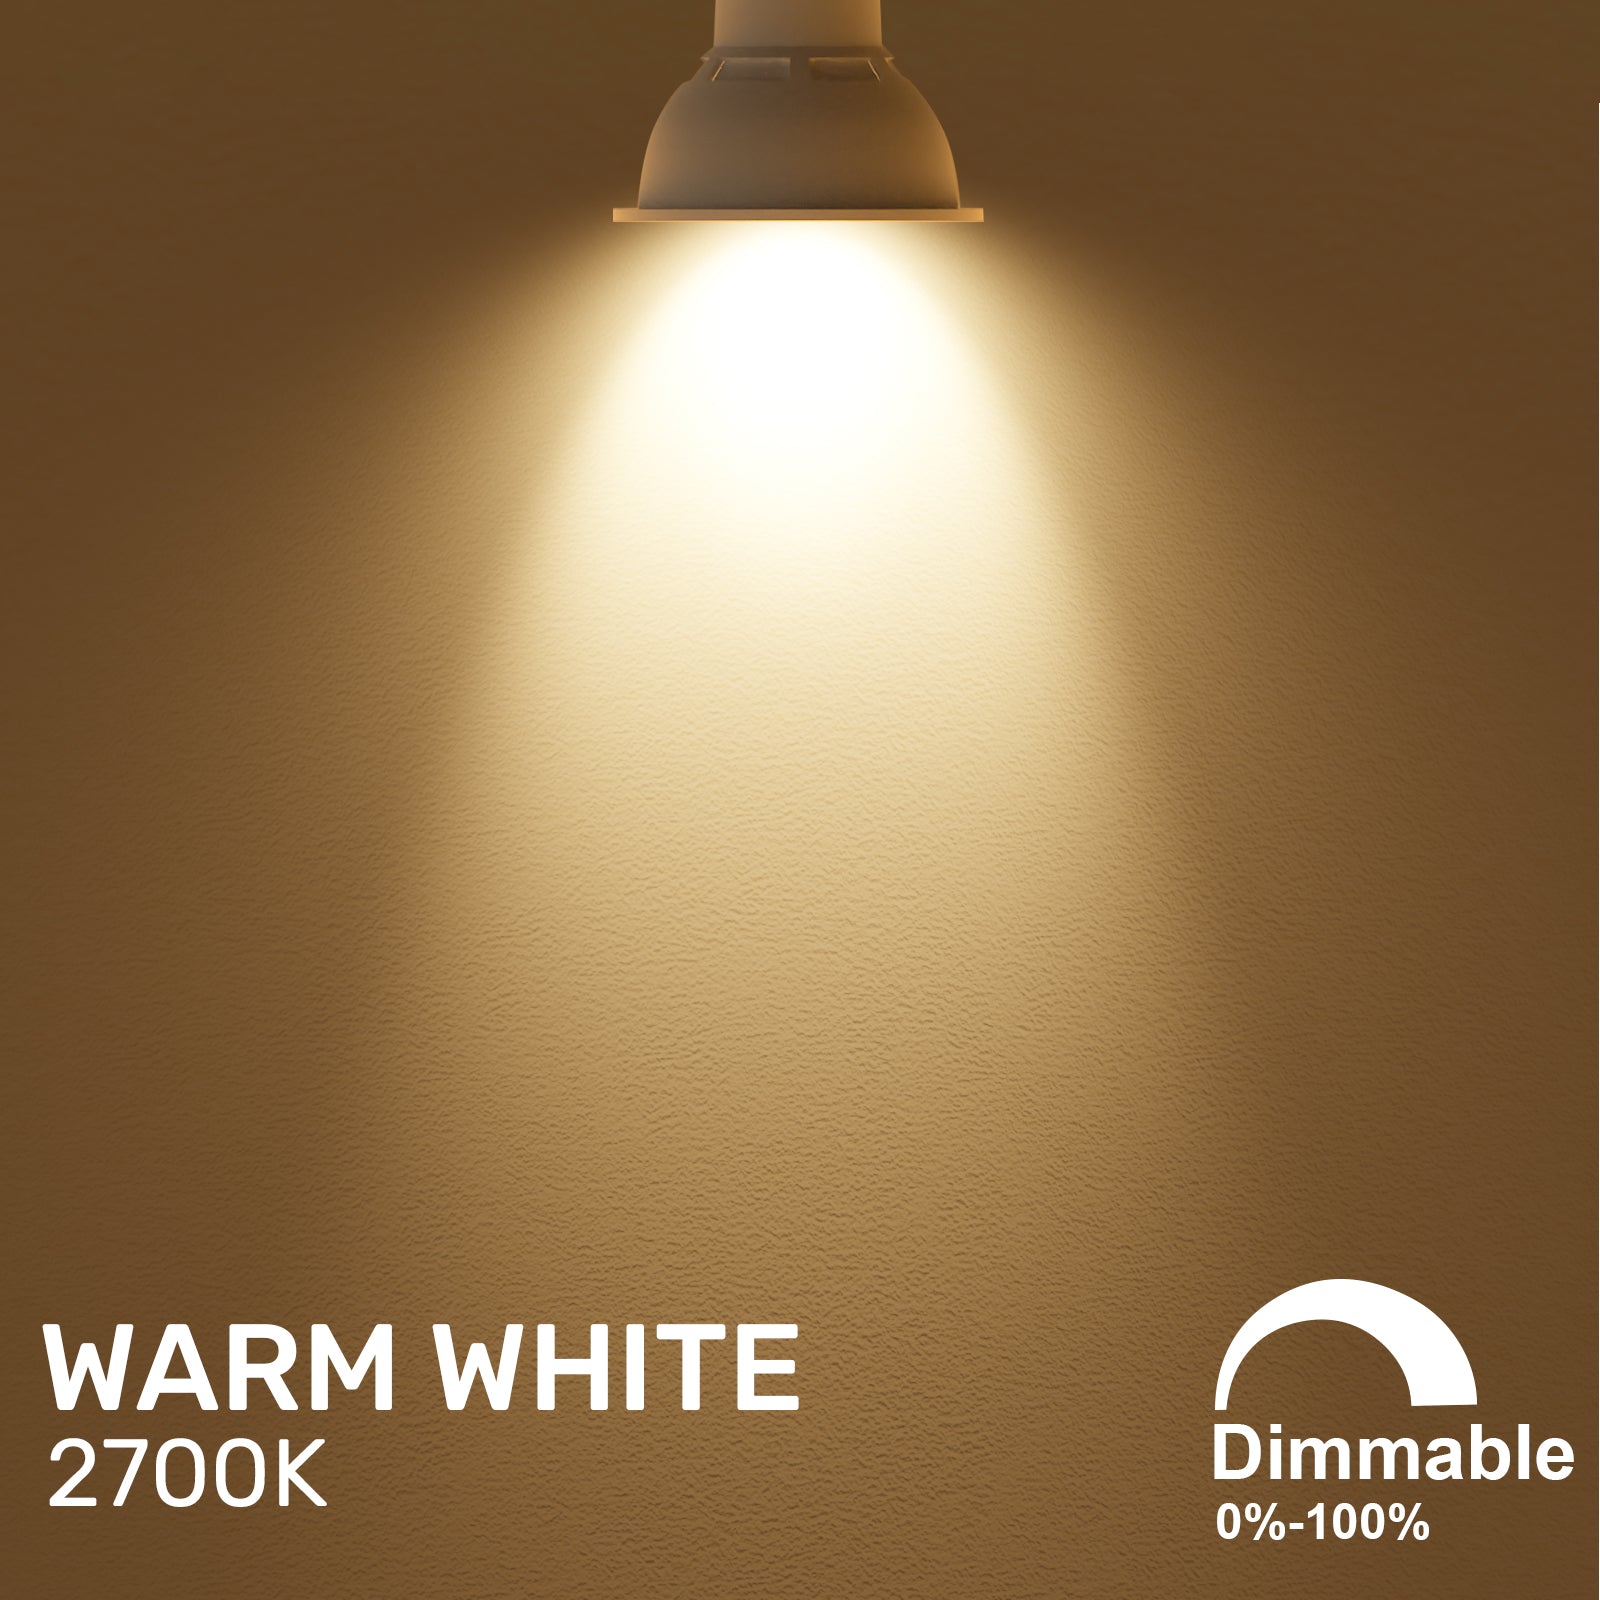 LED Dimmable L007 Spotlight 4.5W (50w), GU10, 345 Lumens, Warm White(2700K), 240V